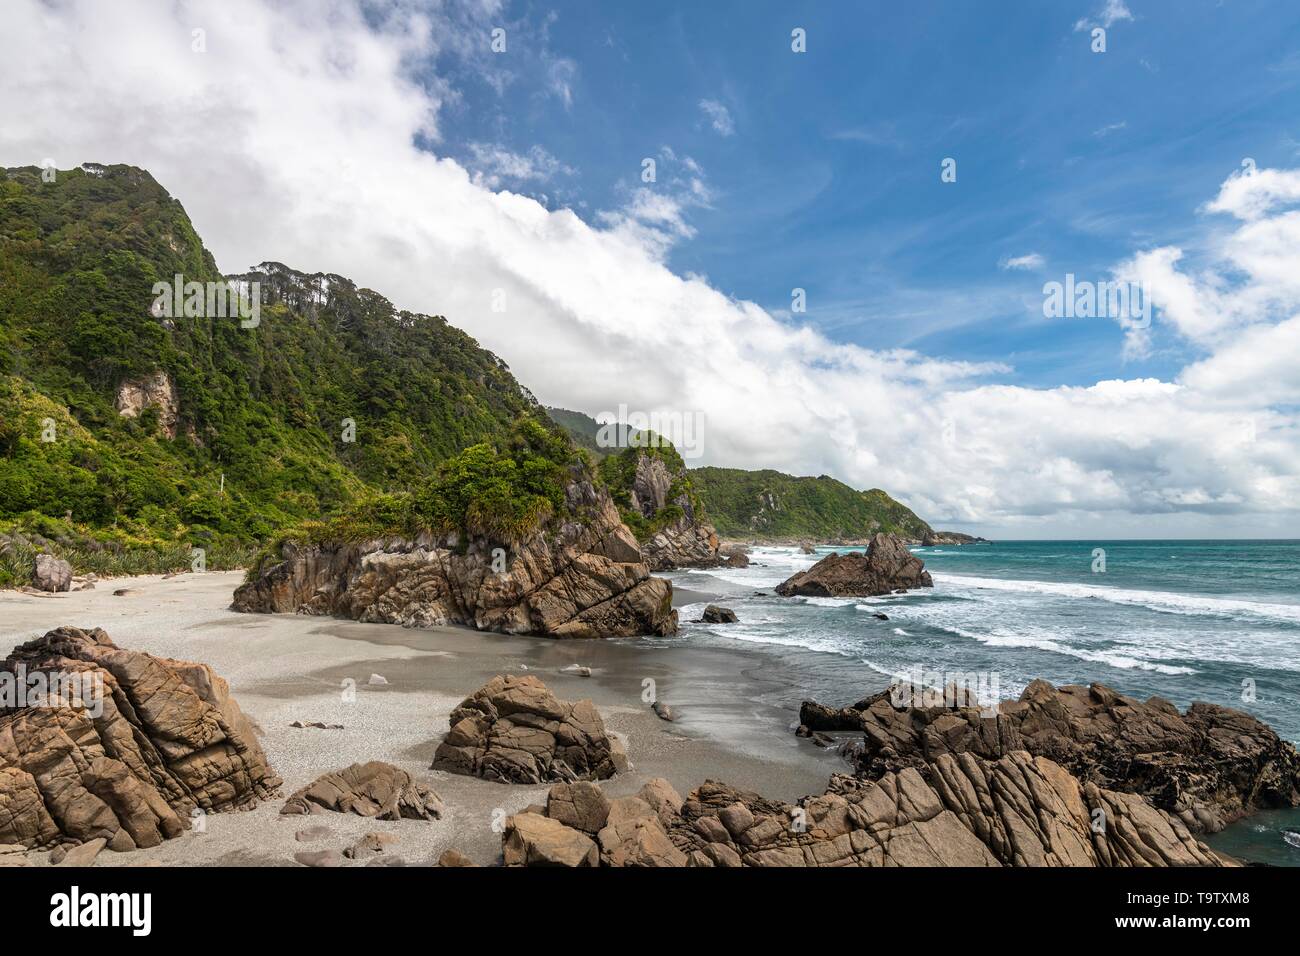 Rocks On The Beach Rugged Rocky Coast In Paparoa National Park West Coast Region South Island New Zealand Stock Photo Alamy